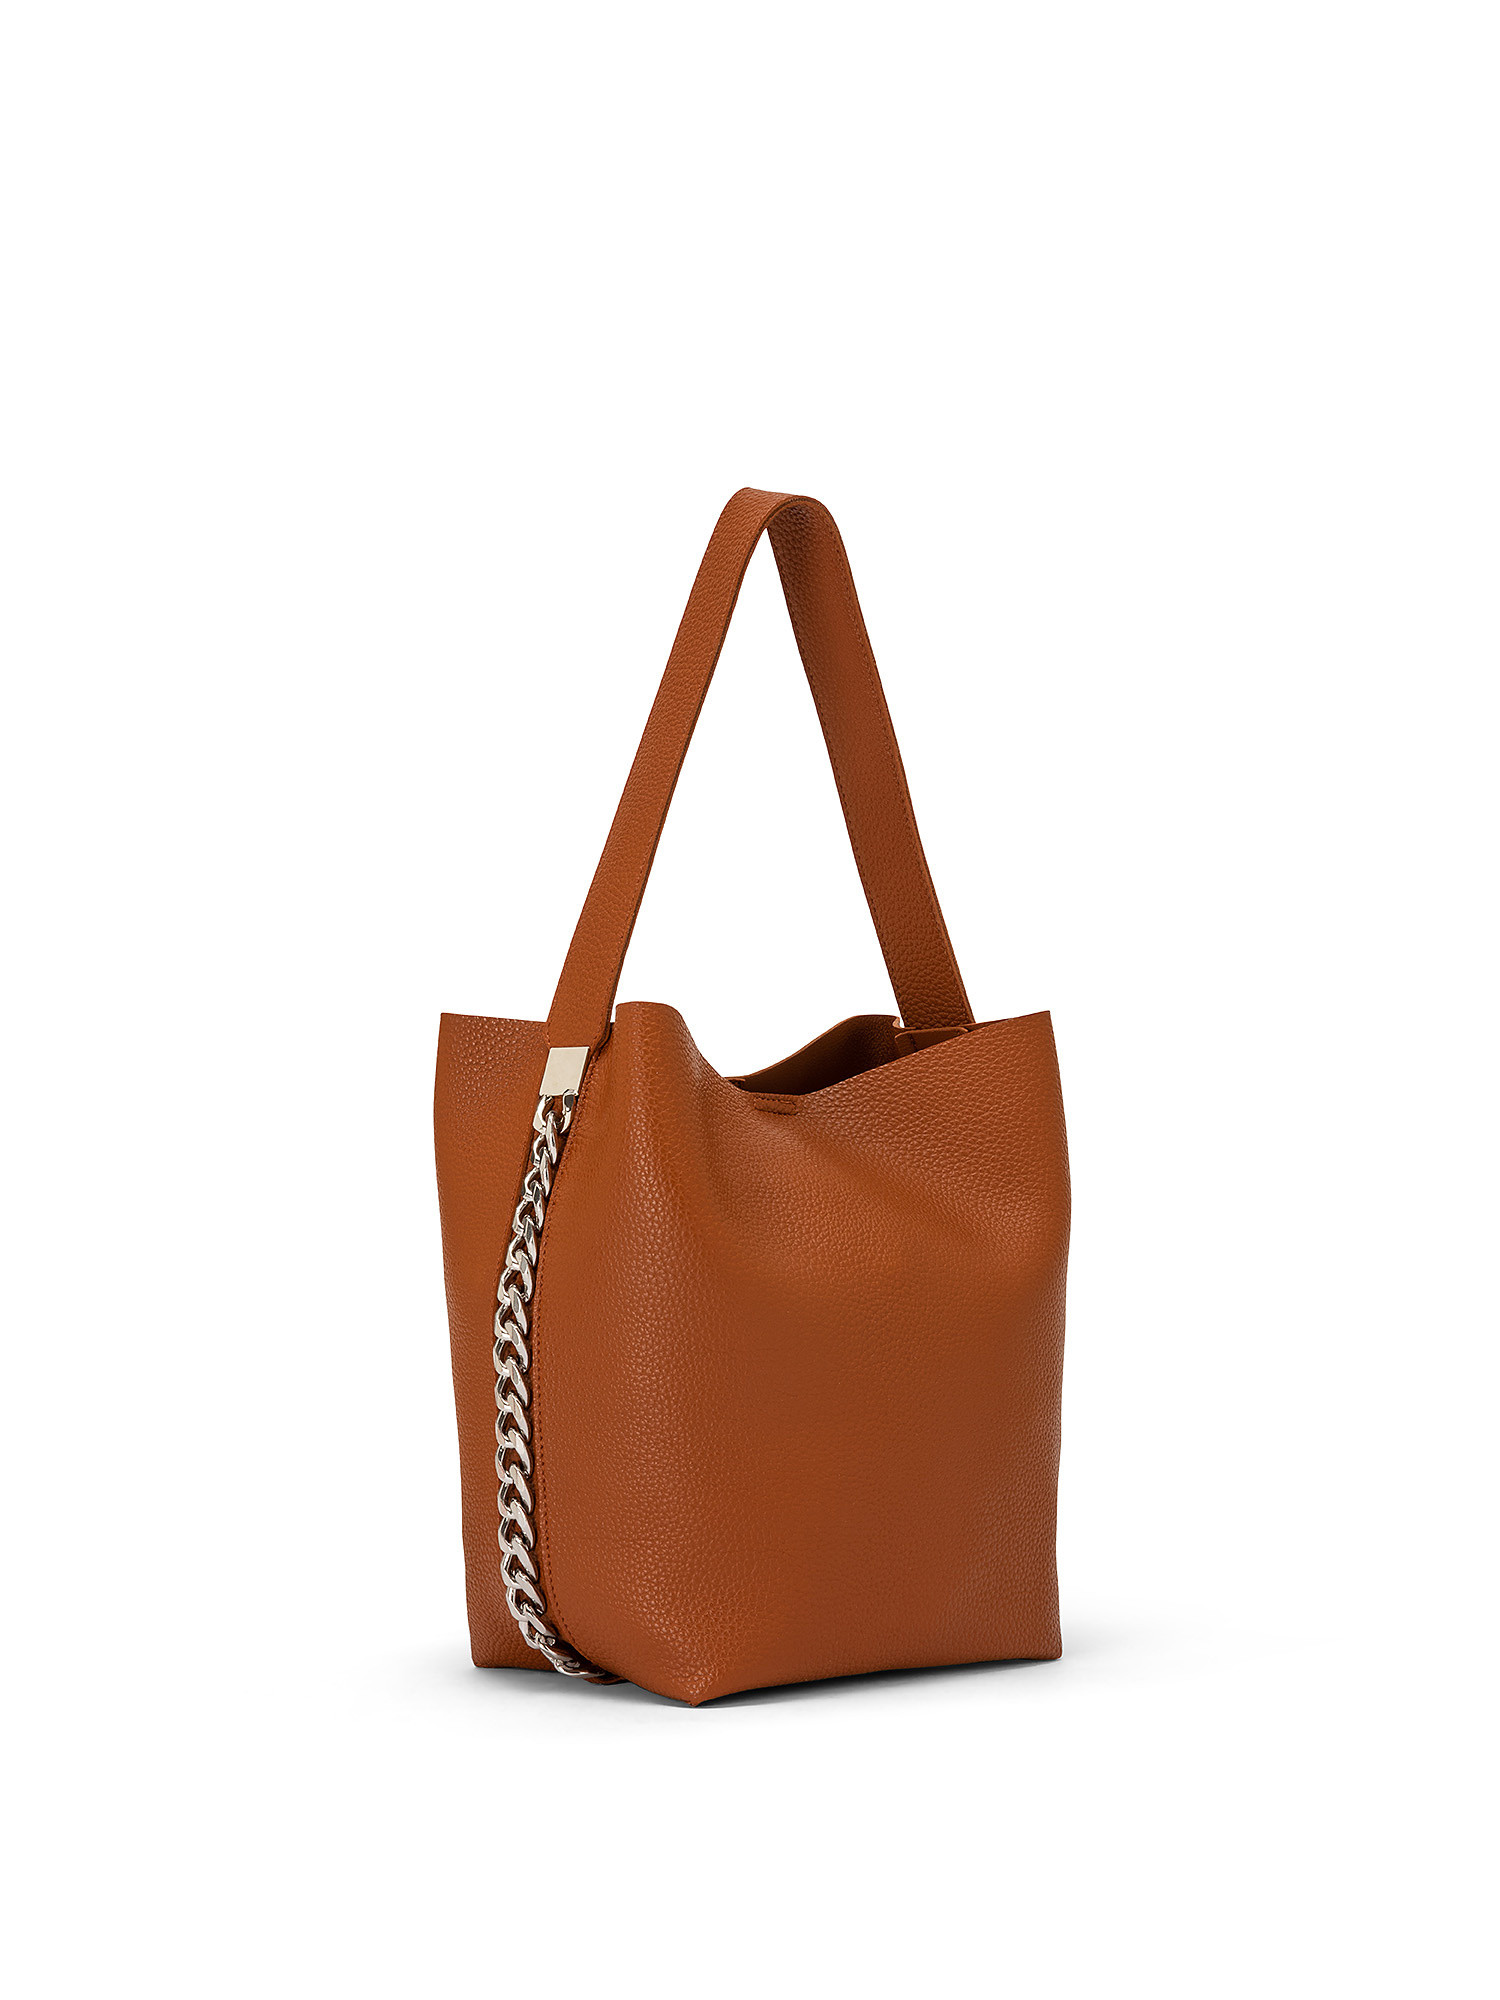 Hobo bag, Leather Brown, large image number 1